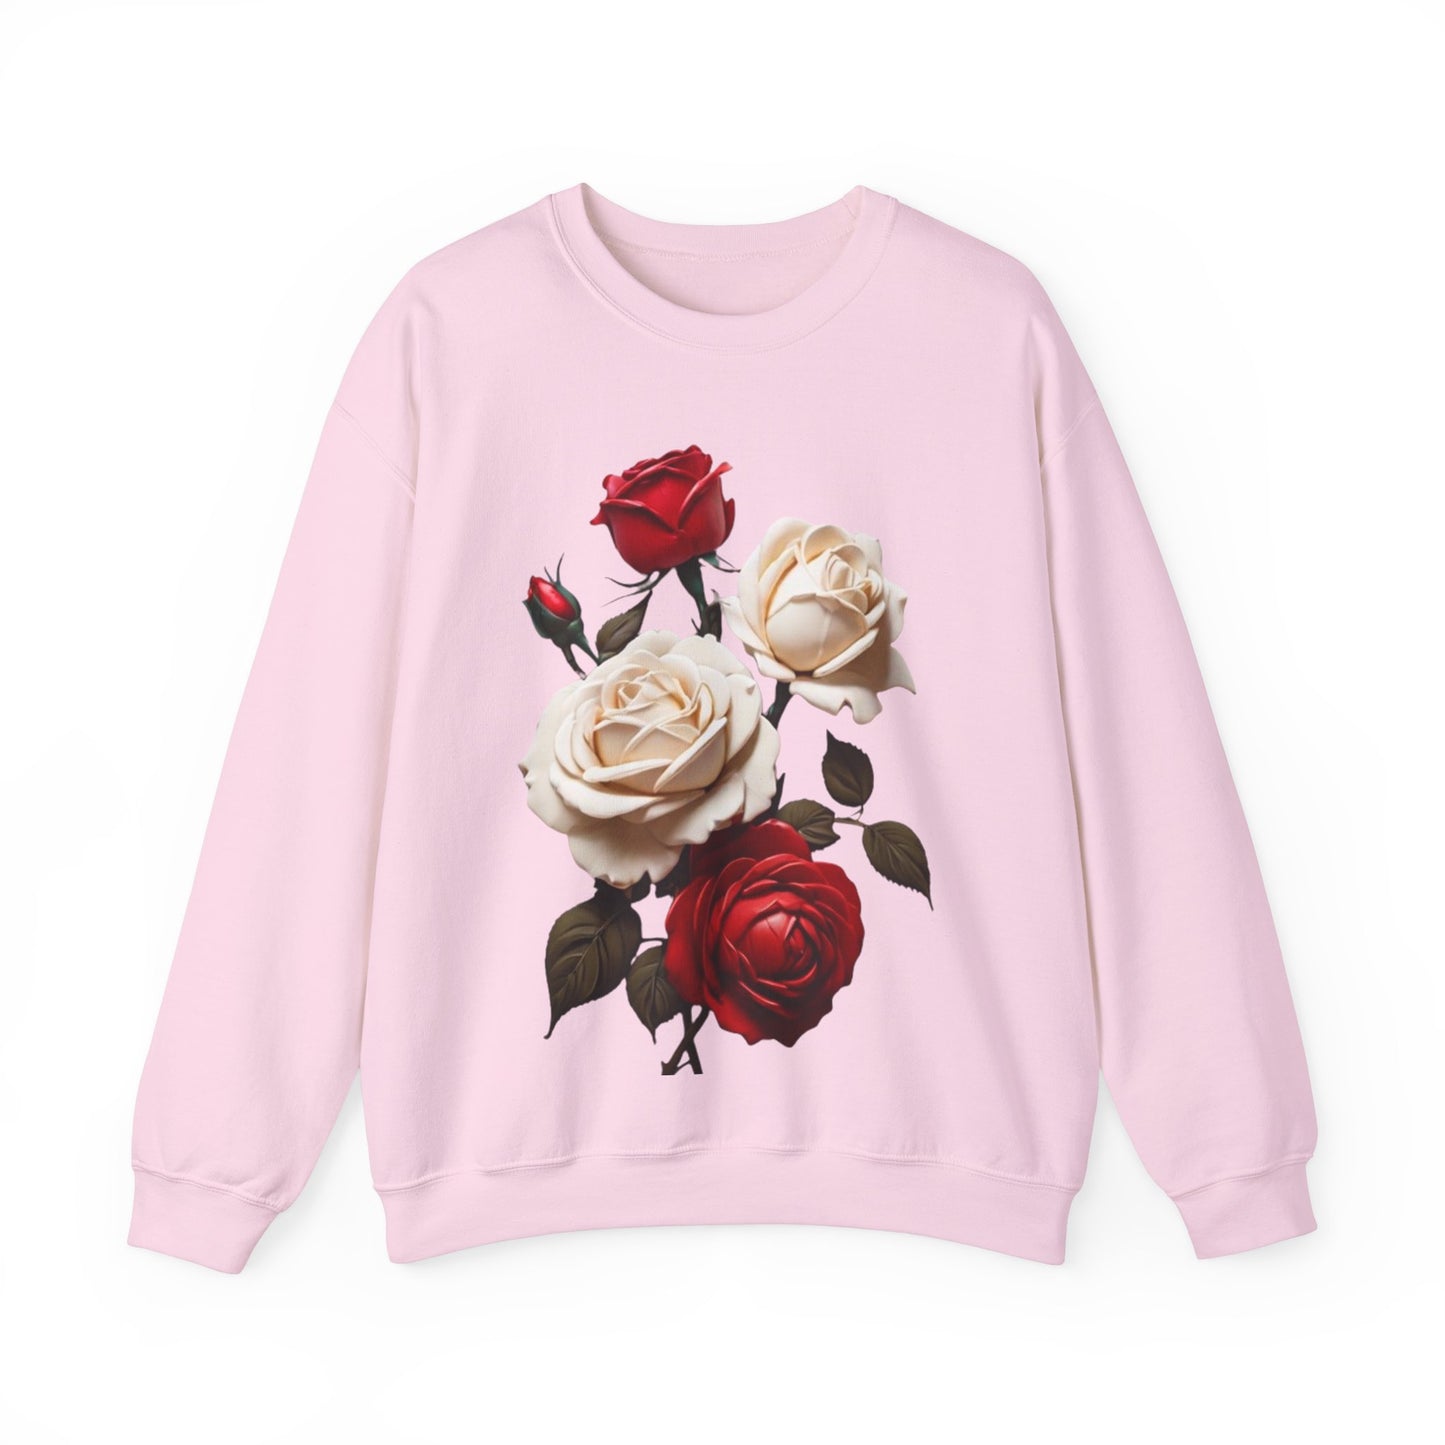 Red and White Roses - Unisex Crewneck Sweatshirt